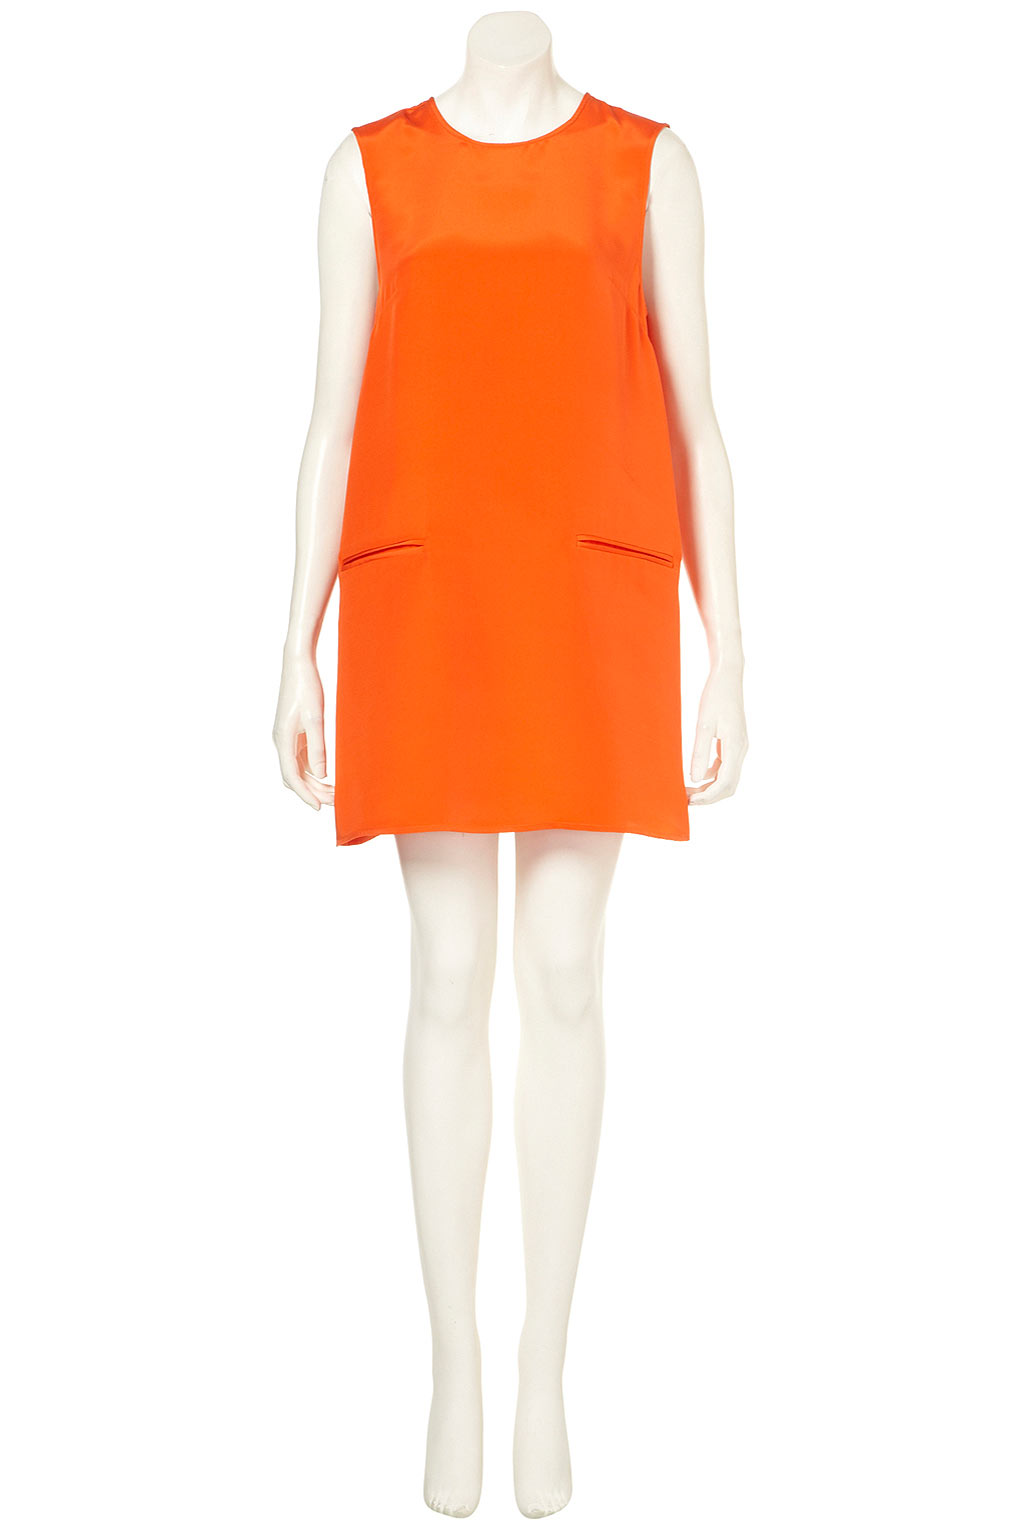 Lyst - Topshop Silk Pocket Shift Dress in Orange